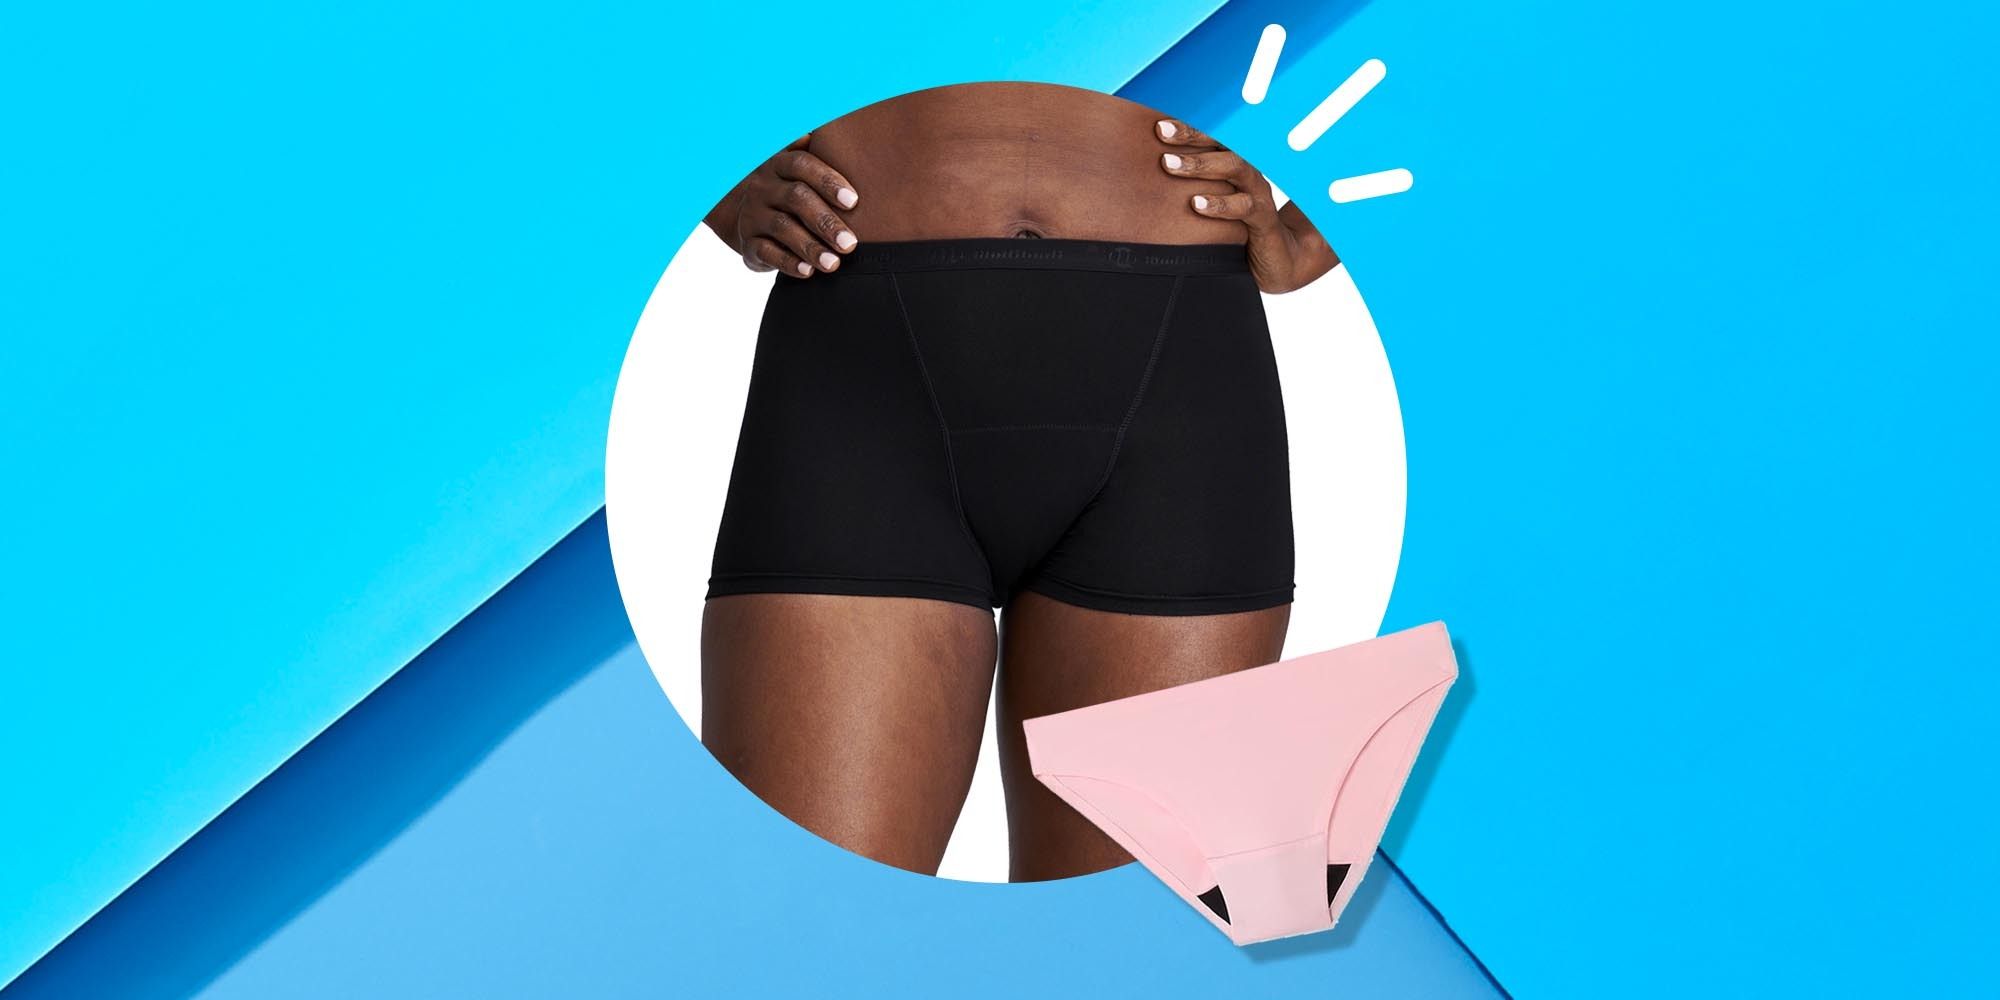 11 Best Leakproof, Absorbent Period Panties Of 2022: Brief Underwear, Hiphuggers, And More